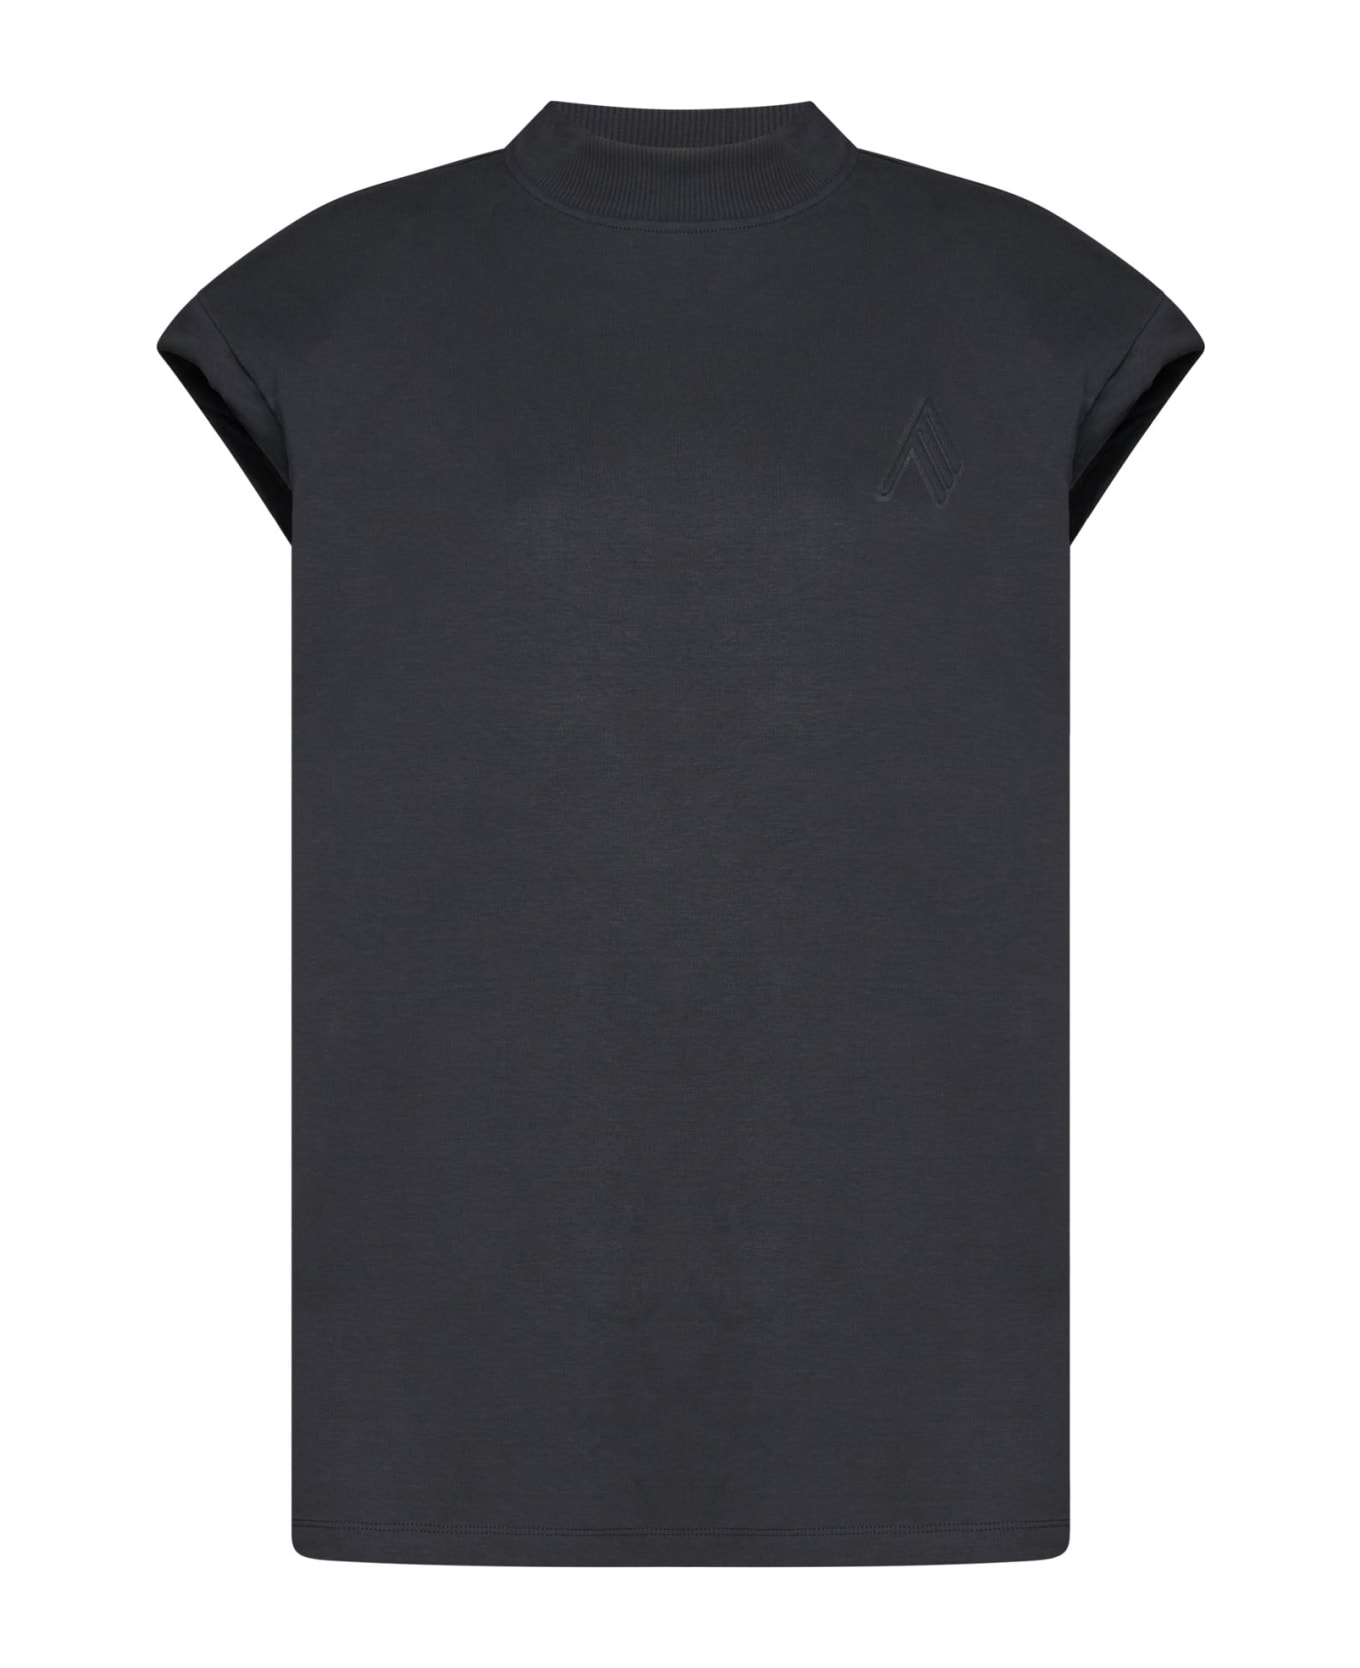 The Attico T-Shirt - Black